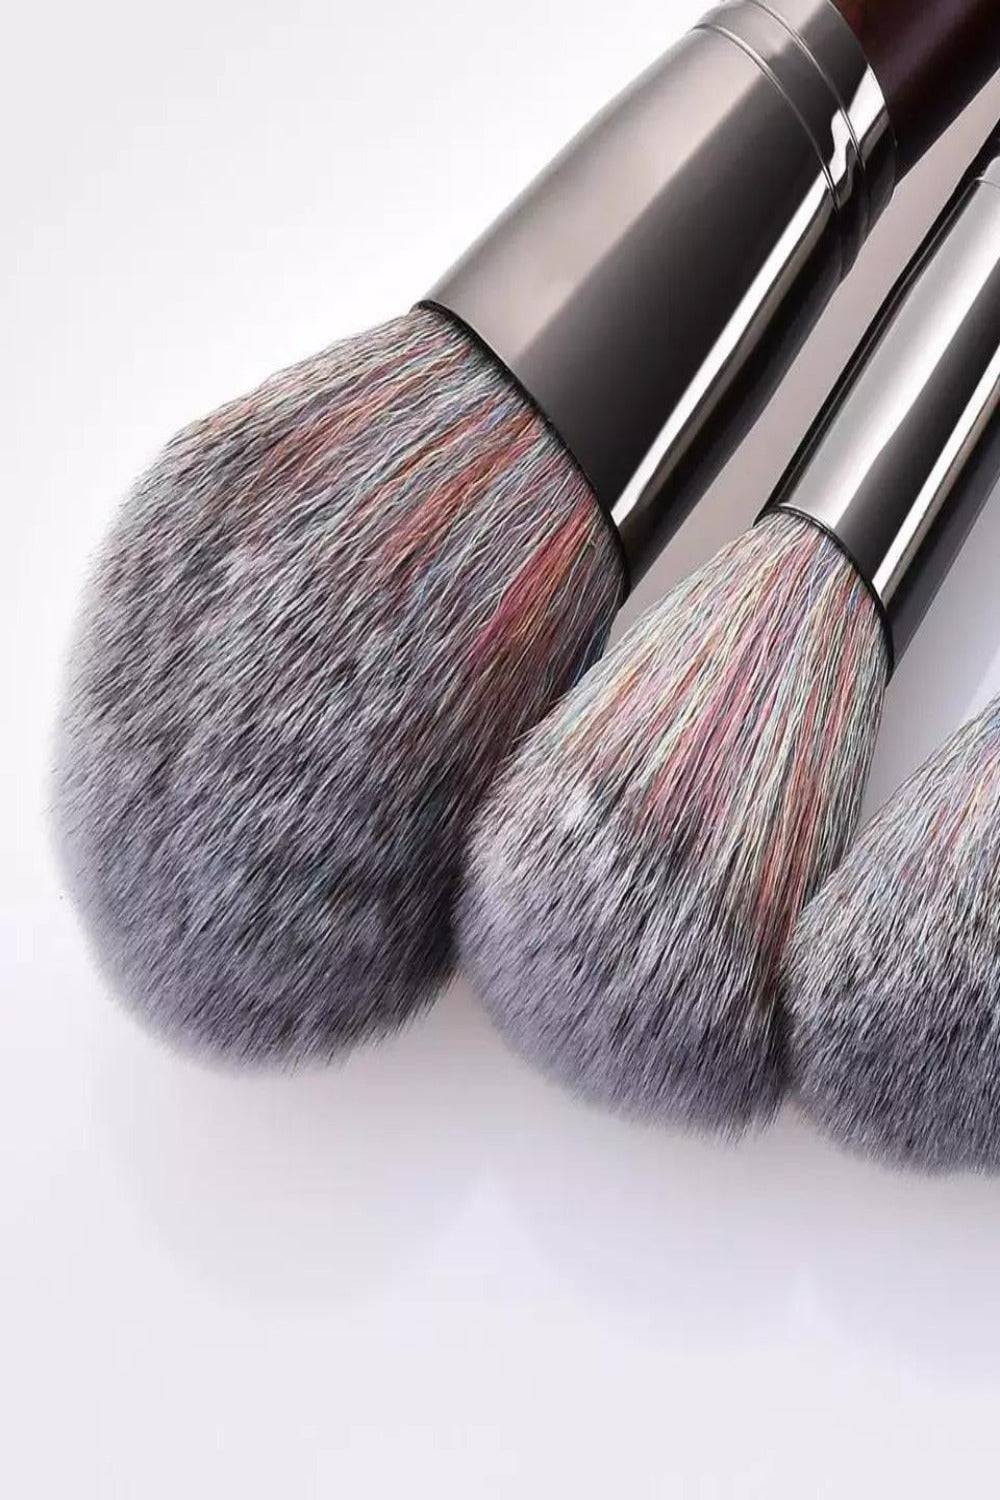 Luxe Brown Wooden Professional Makeup Brush Set - 11 Pcs - TGC Boutique - Makeup Brushes